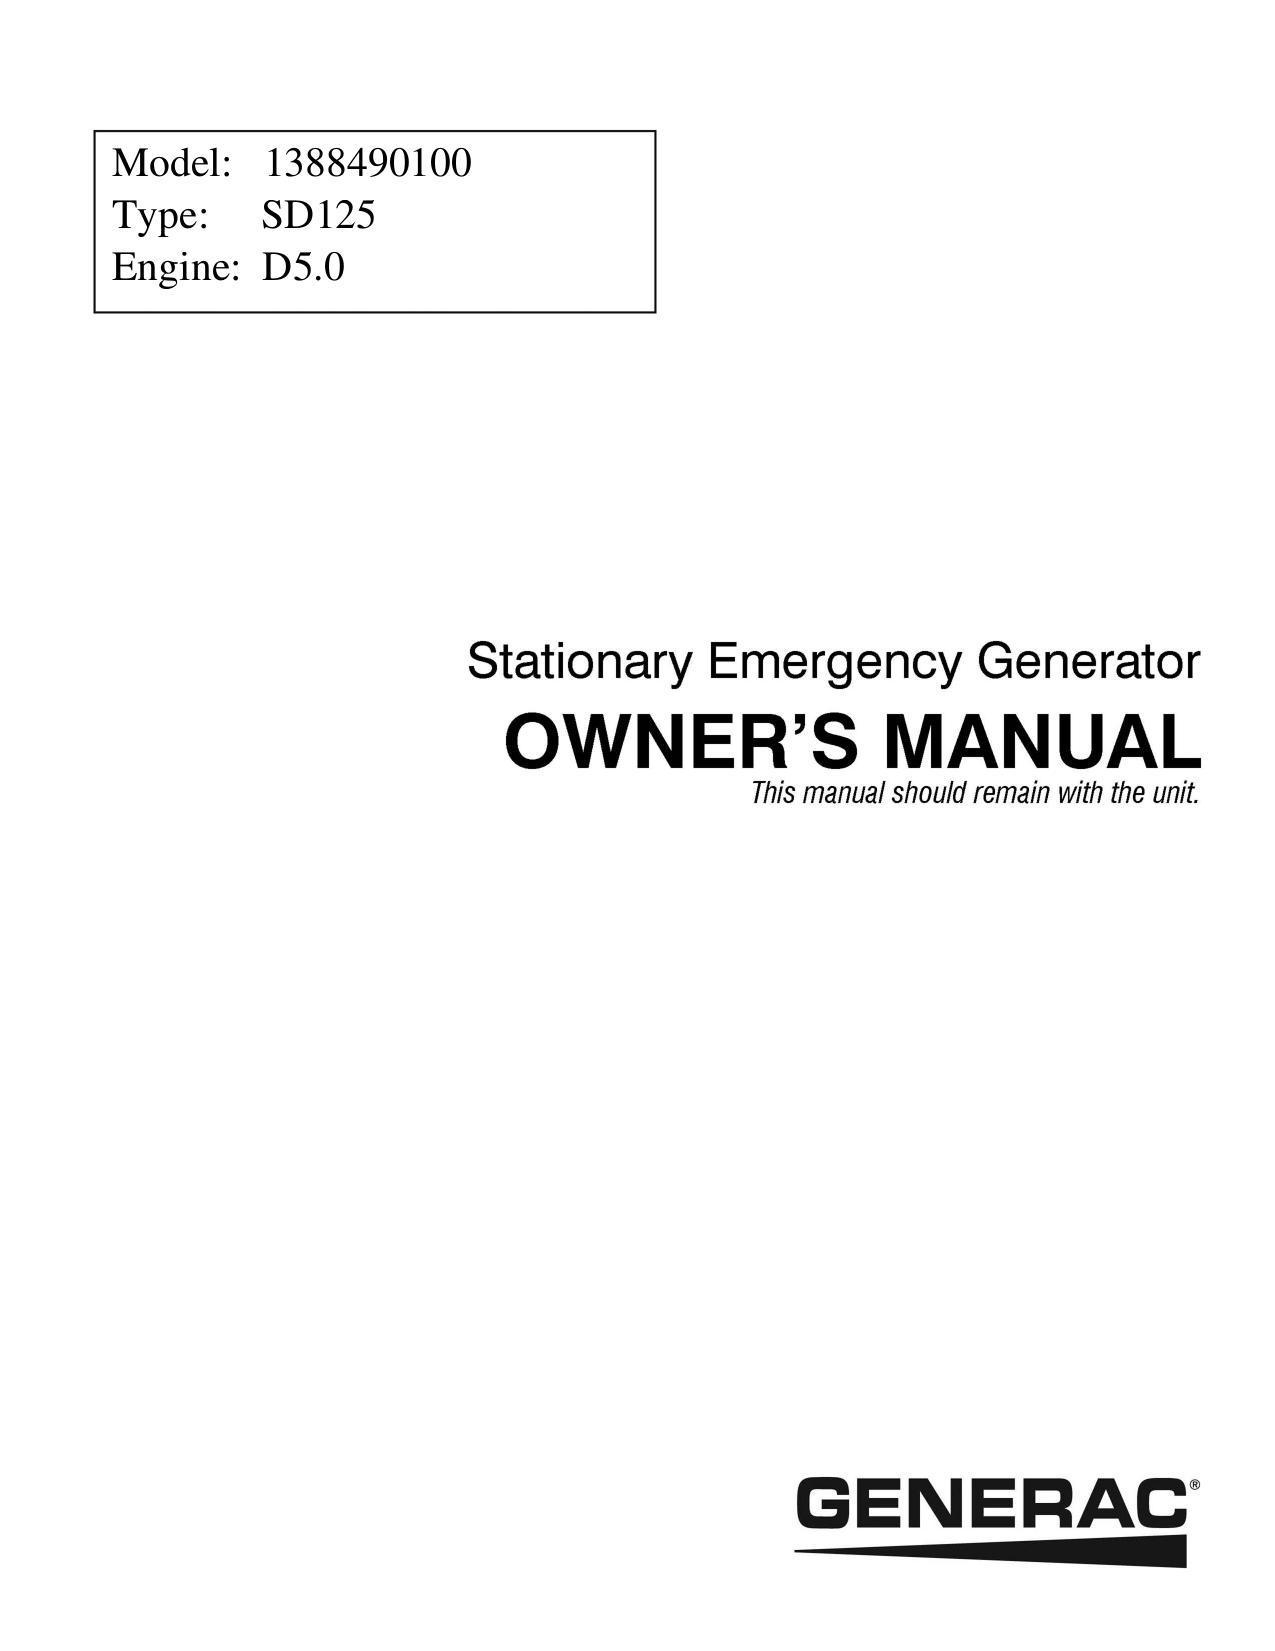 stationary-emergency-generator-owners-manual.pdf